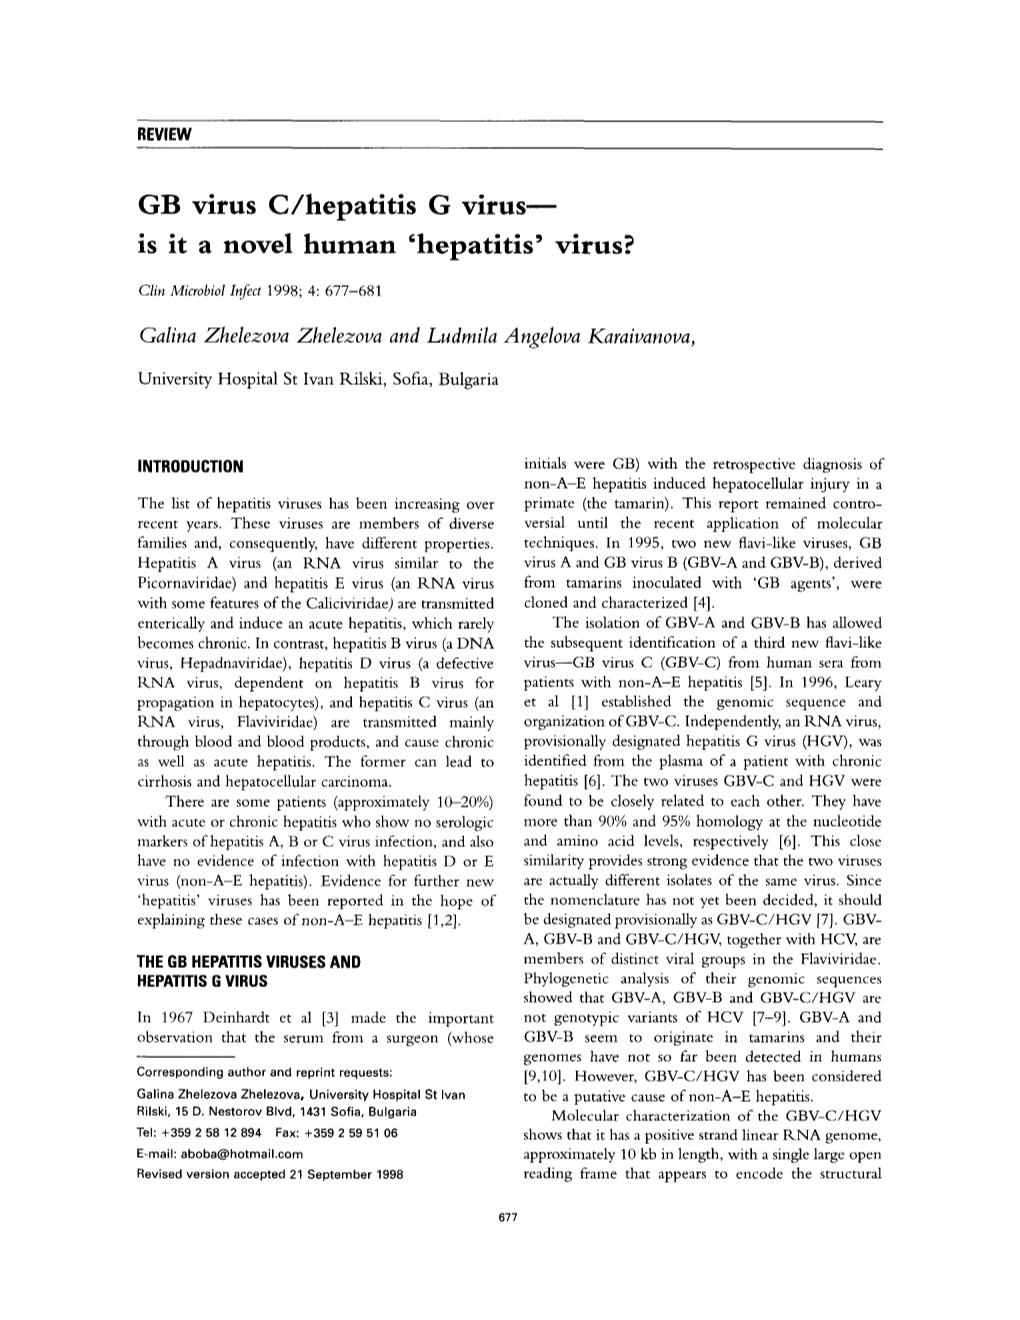 GB Virus C/Hepatitis G Virus—Is It a Novel Human